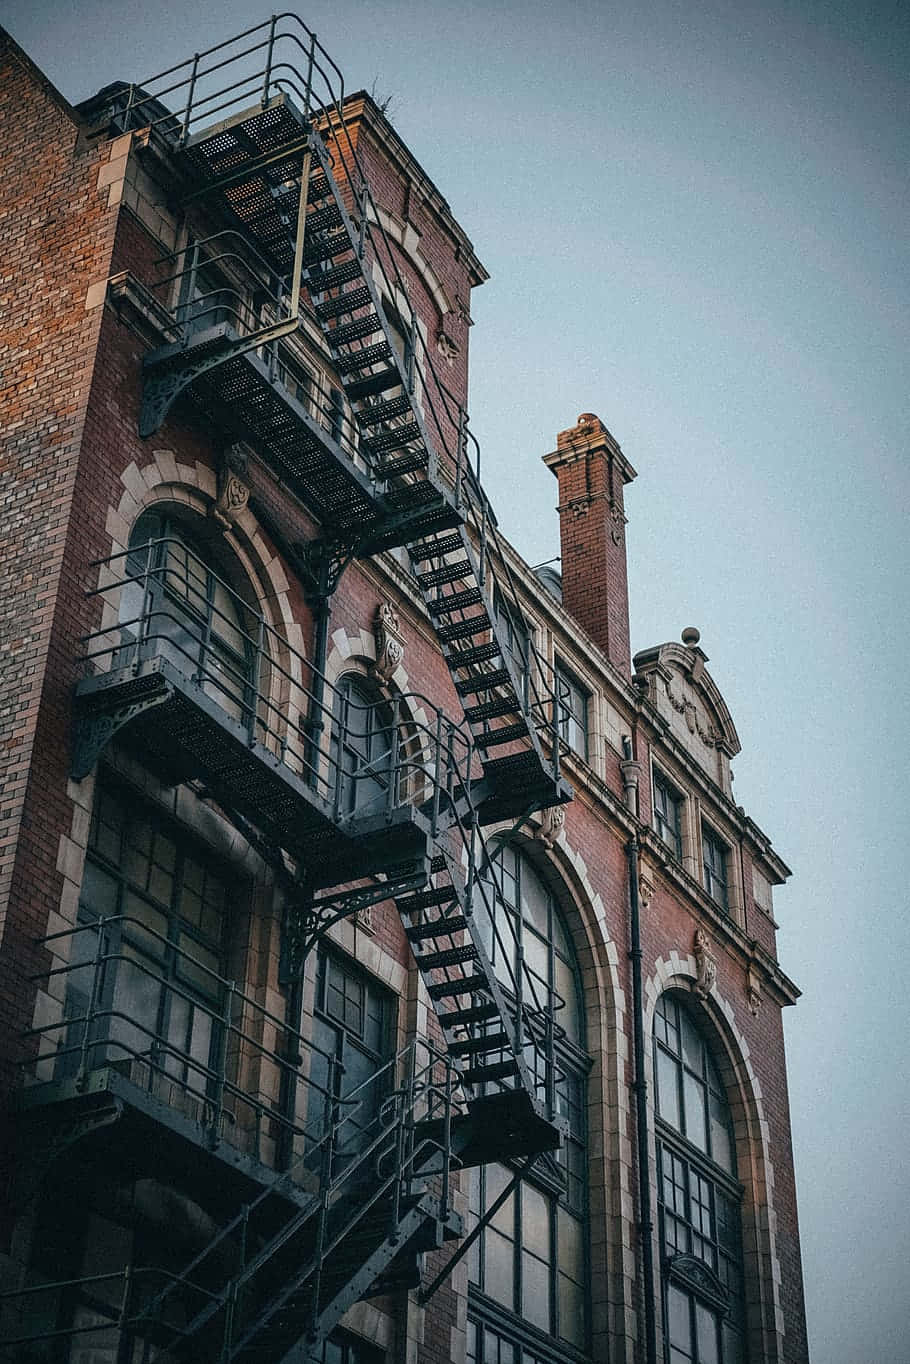 Historic Building Fire Escape Manchester Wallpaper